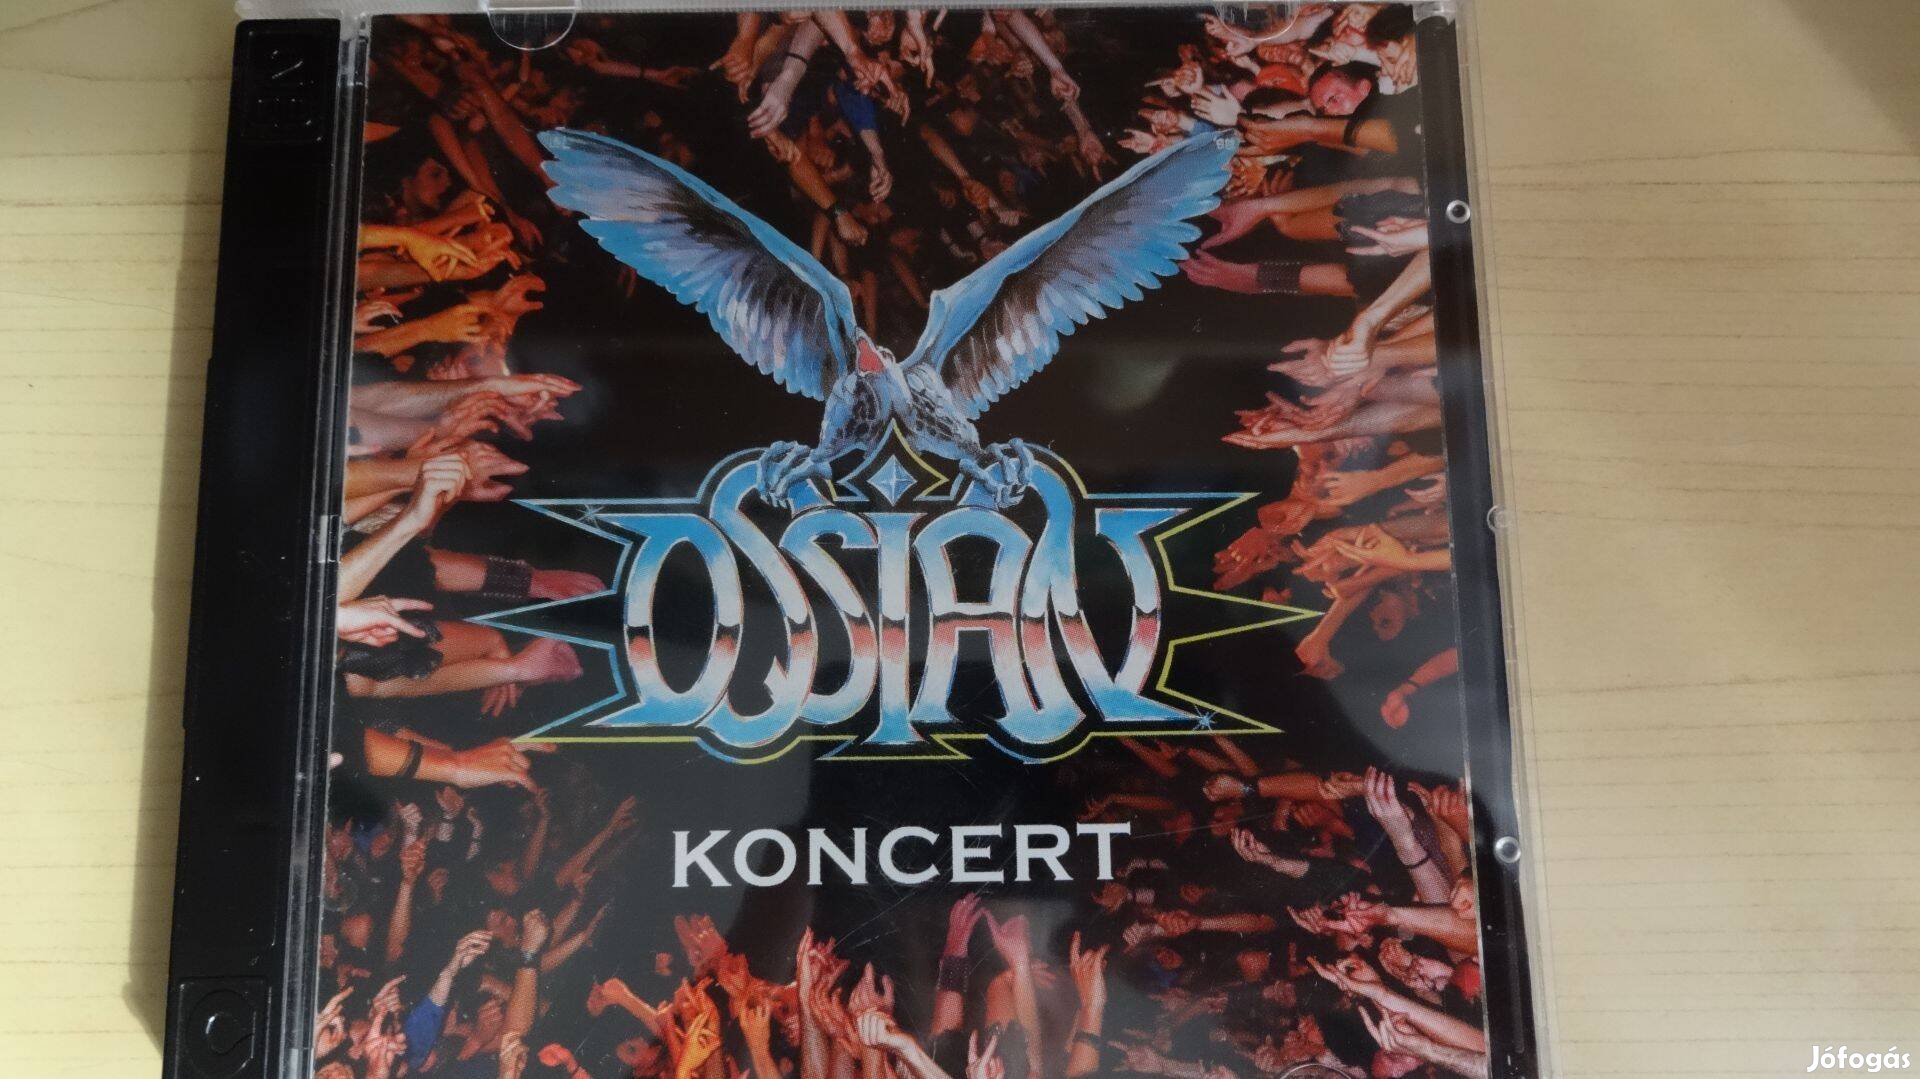 Ossian - Koncert (2CD; 2009)